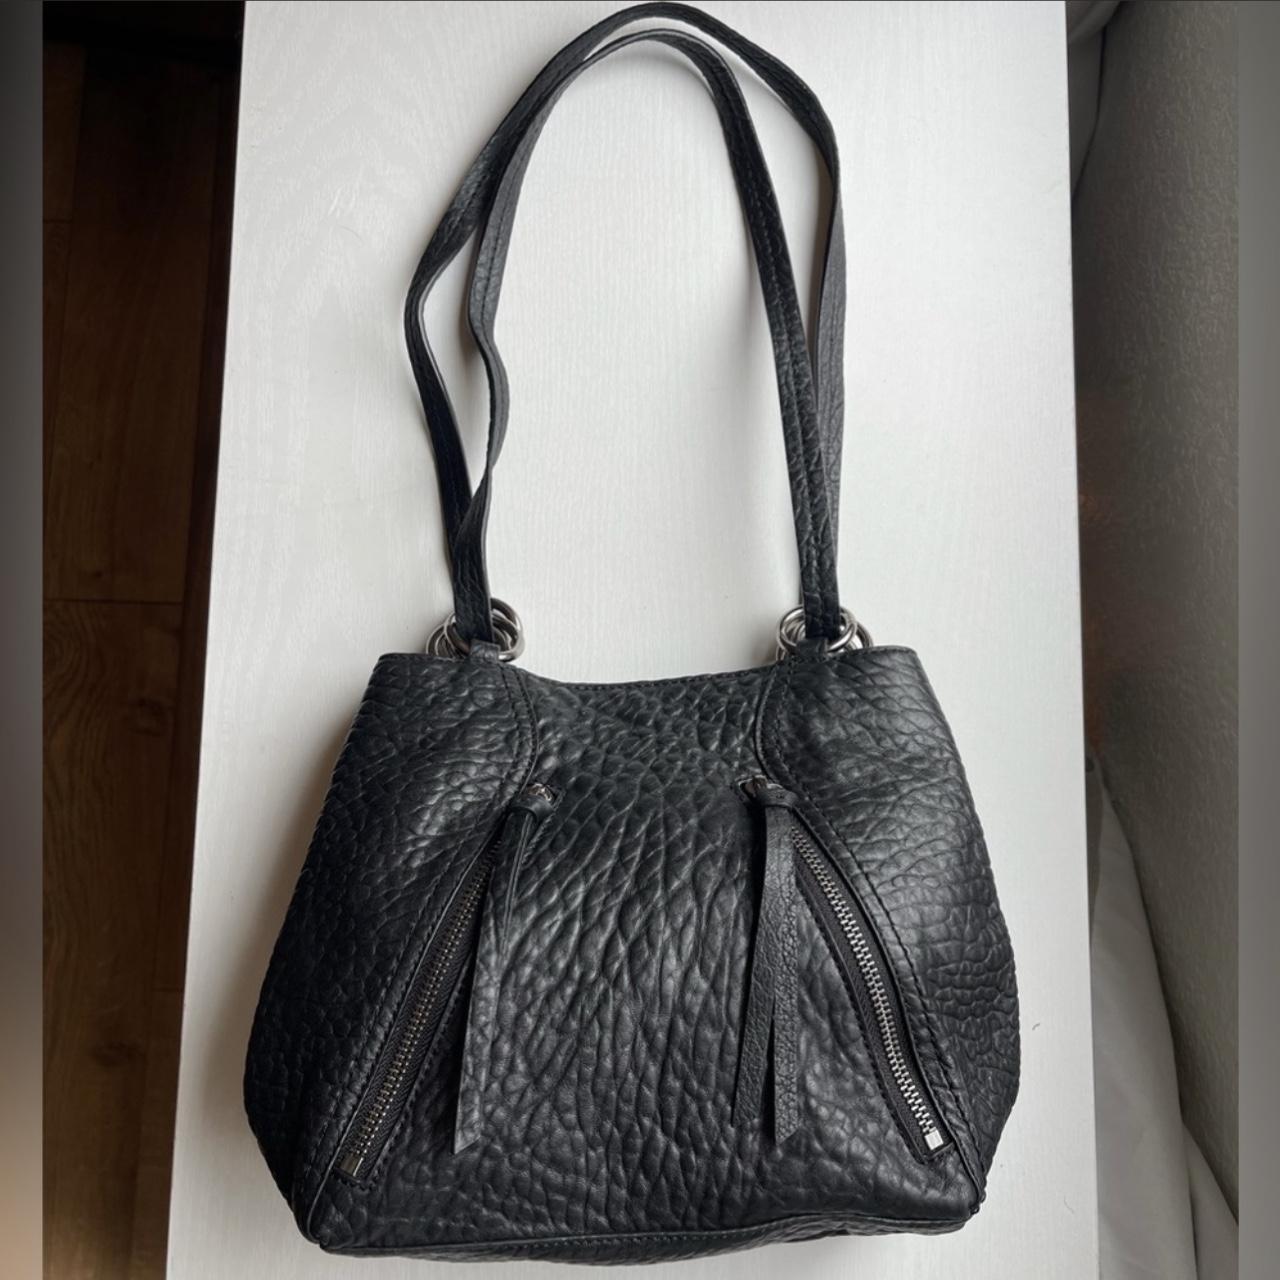 VINCE CAMUTO leather purse 100% genuine textured... - Depop